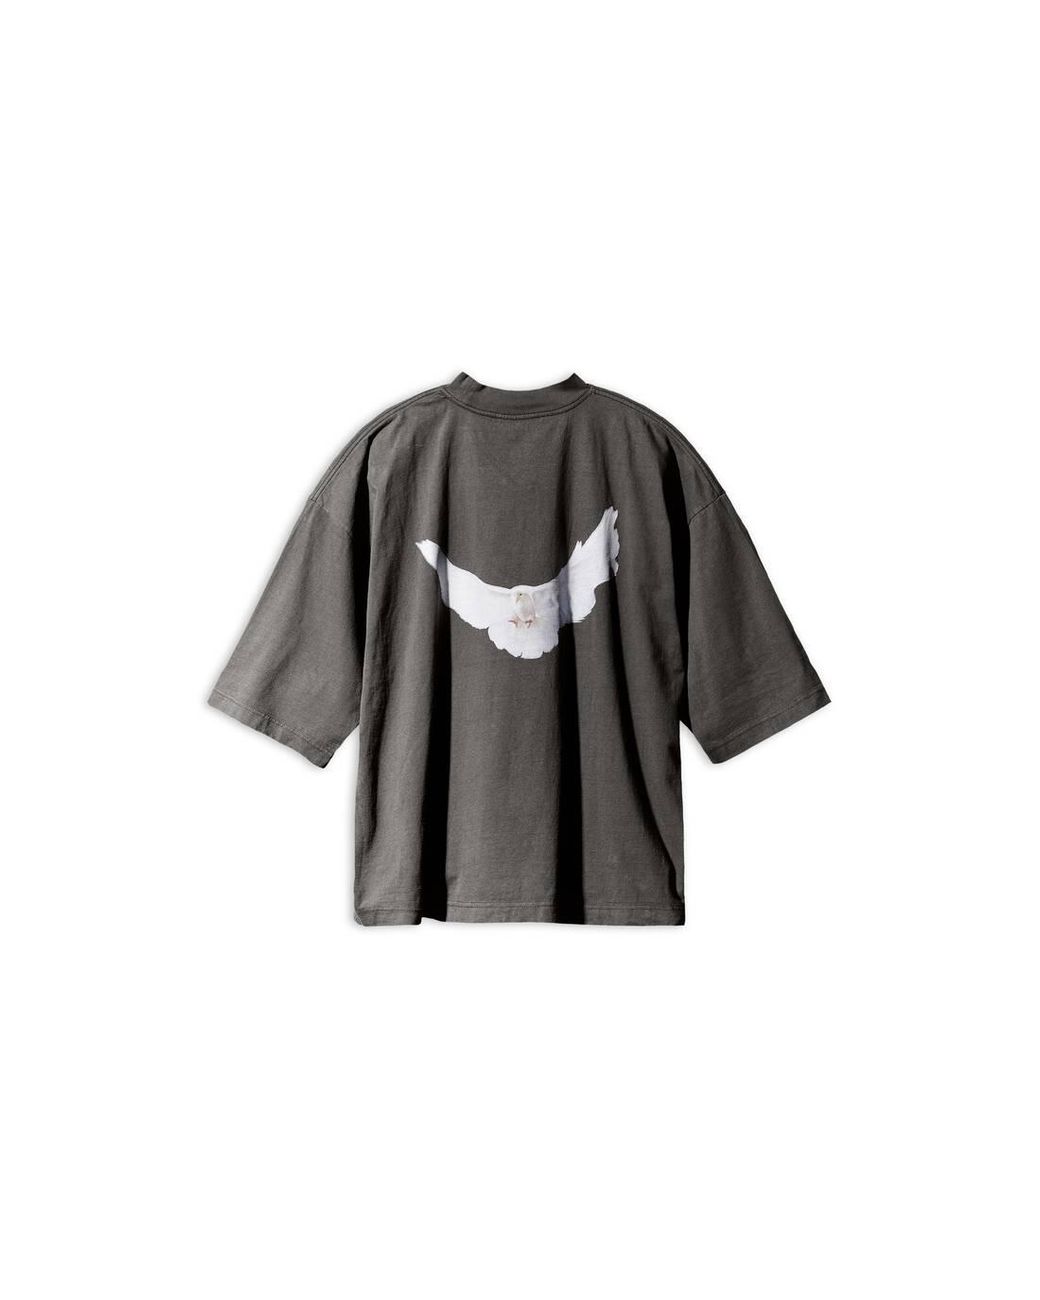 Yeezy Gap Balenciaga DOVE 3/4 sleeve 七分袖 - Tシャツ/カットソー